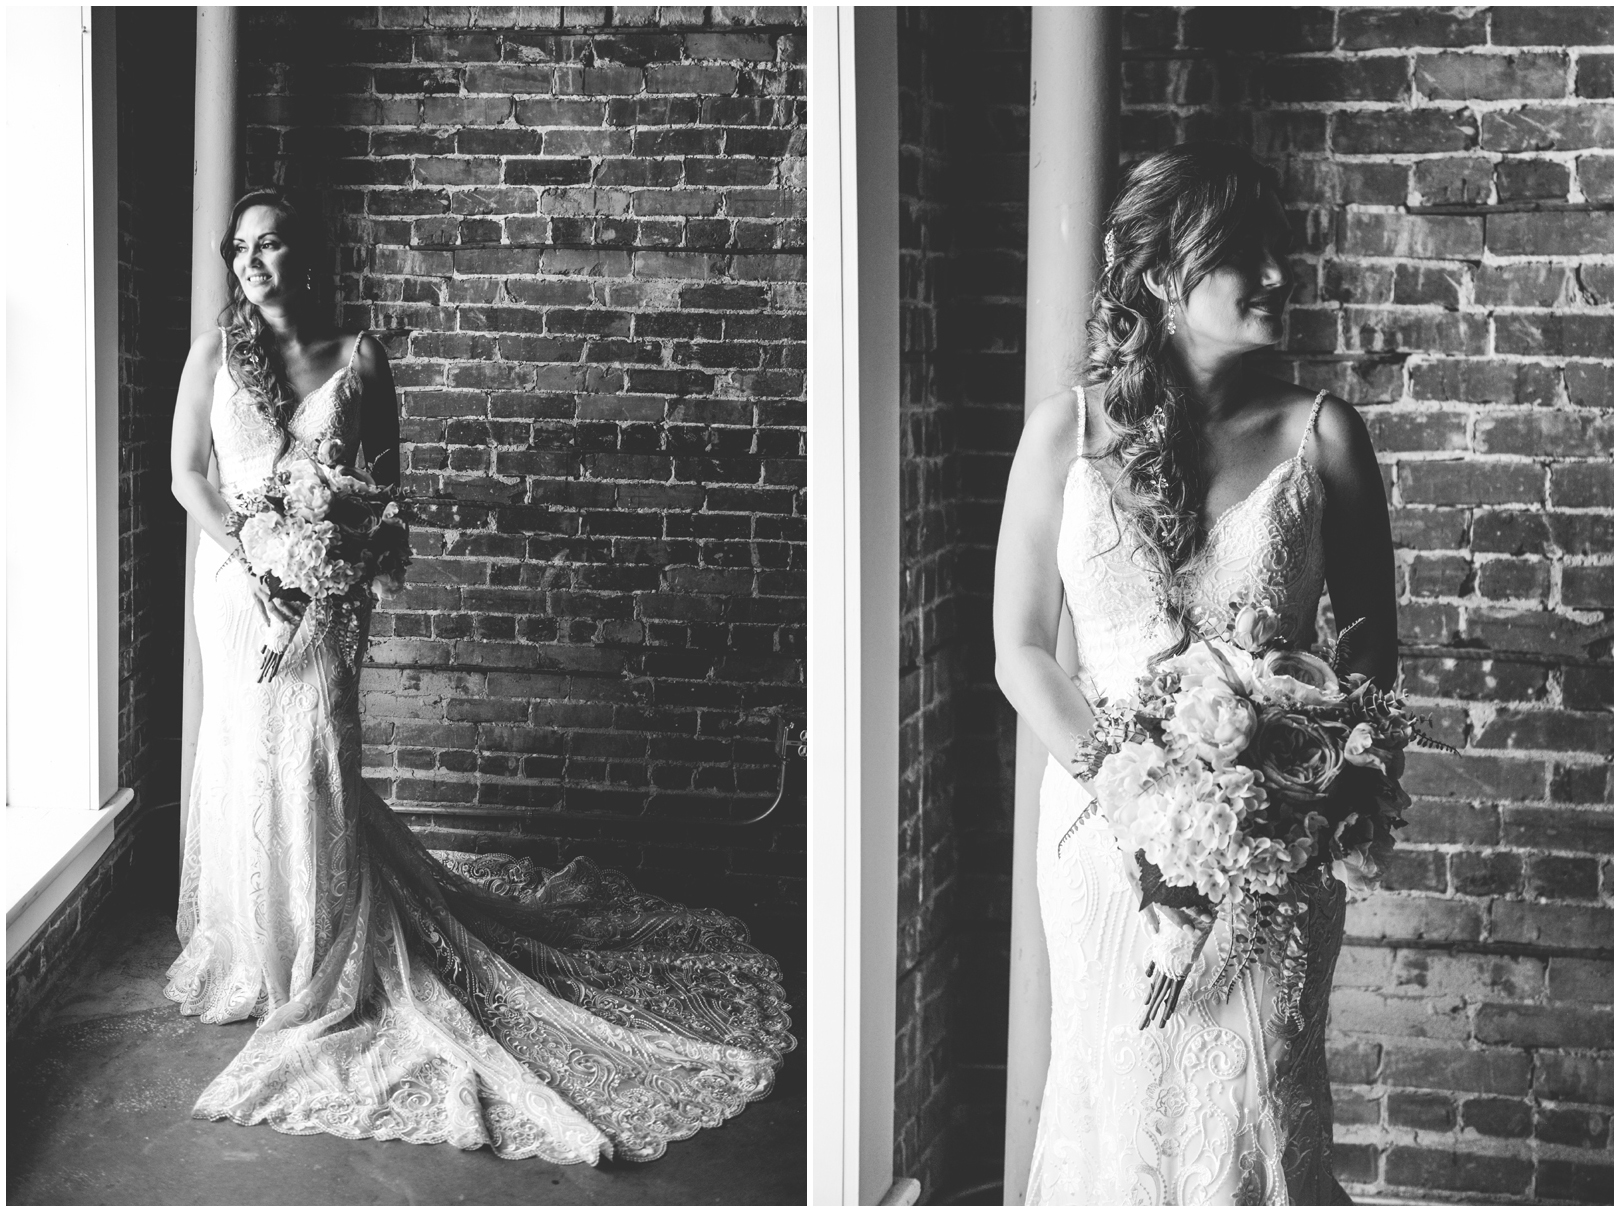 black and white, bridal portrait, portrait, brick, window